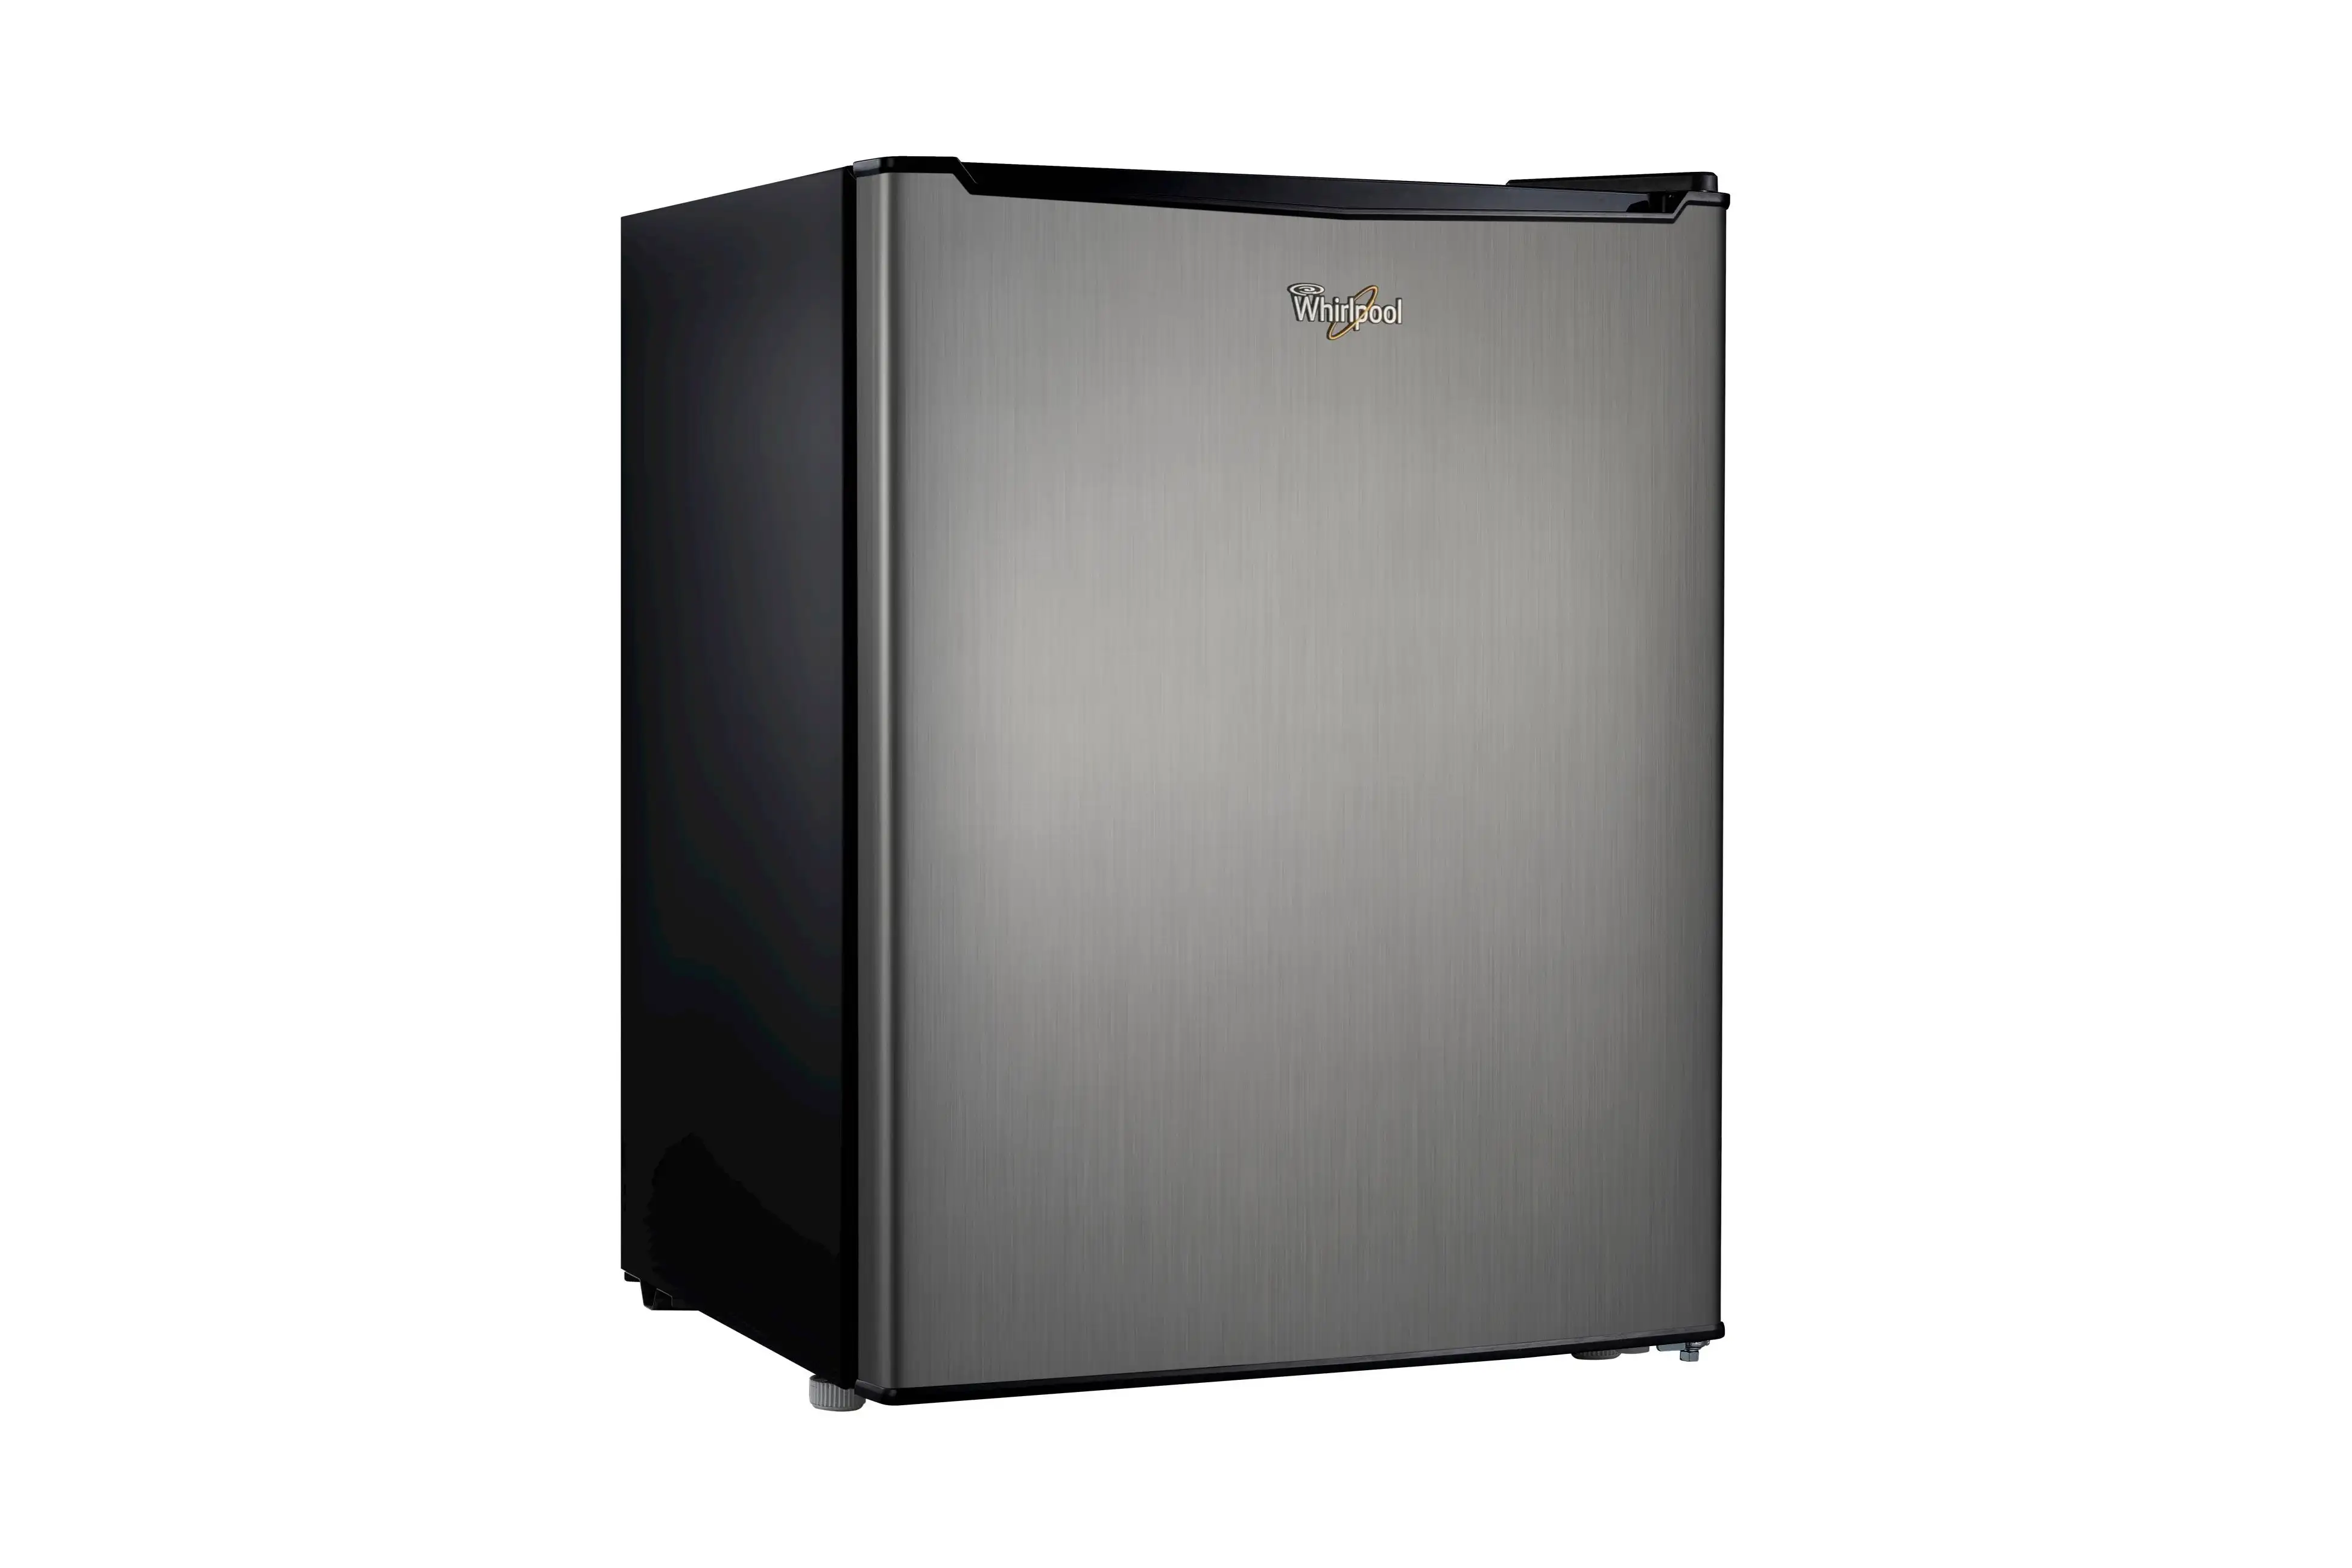 171110-target-black-friday-savings-mini-fridge